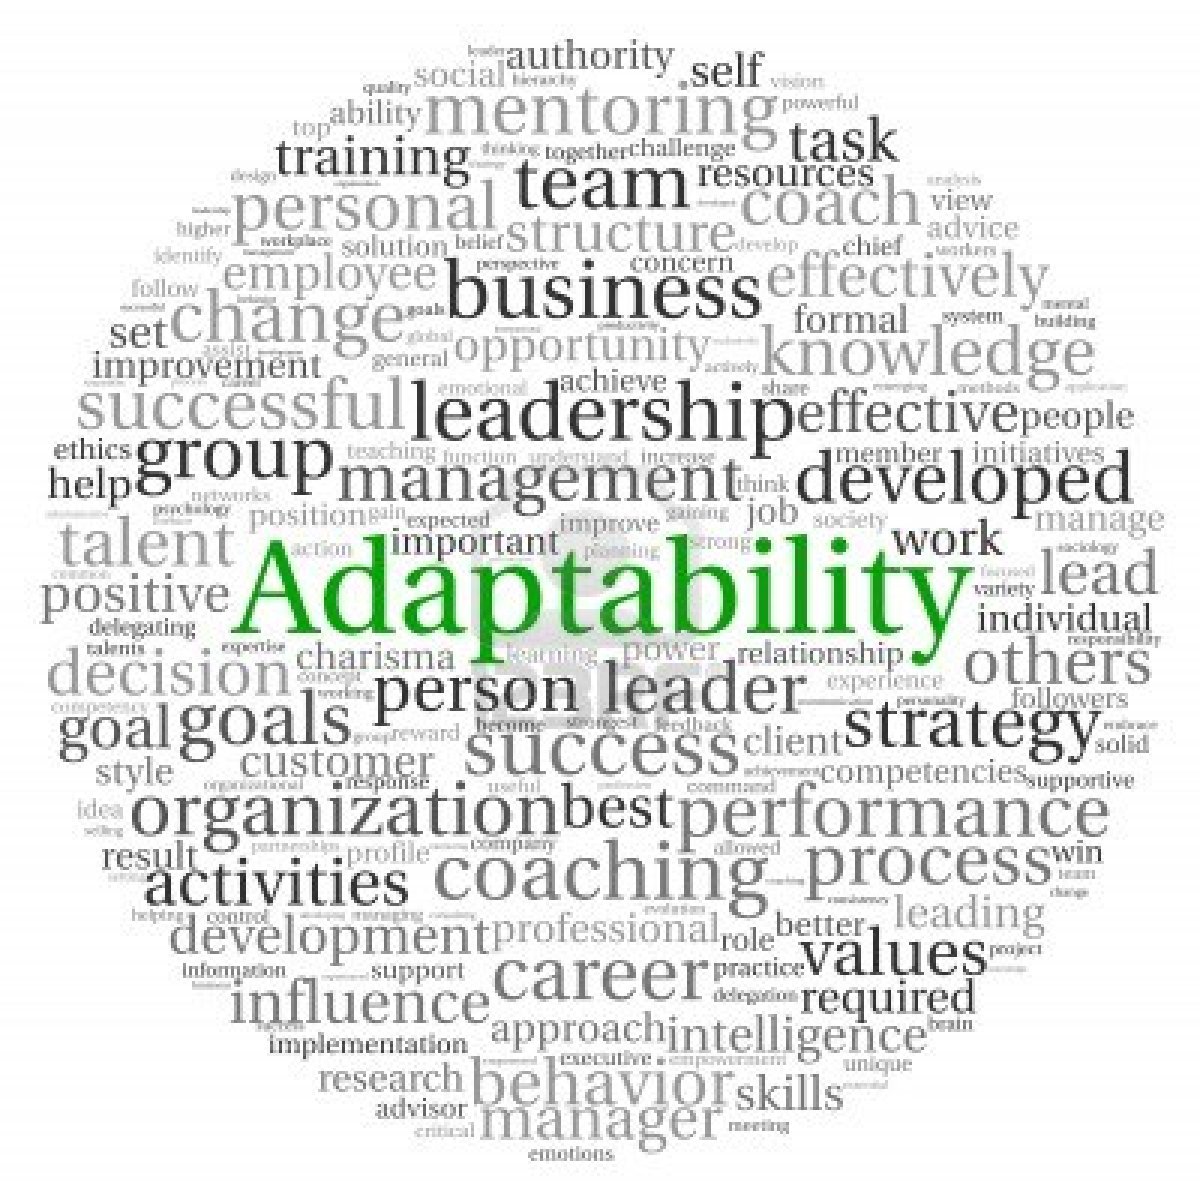 Adaptability_Image.jpg